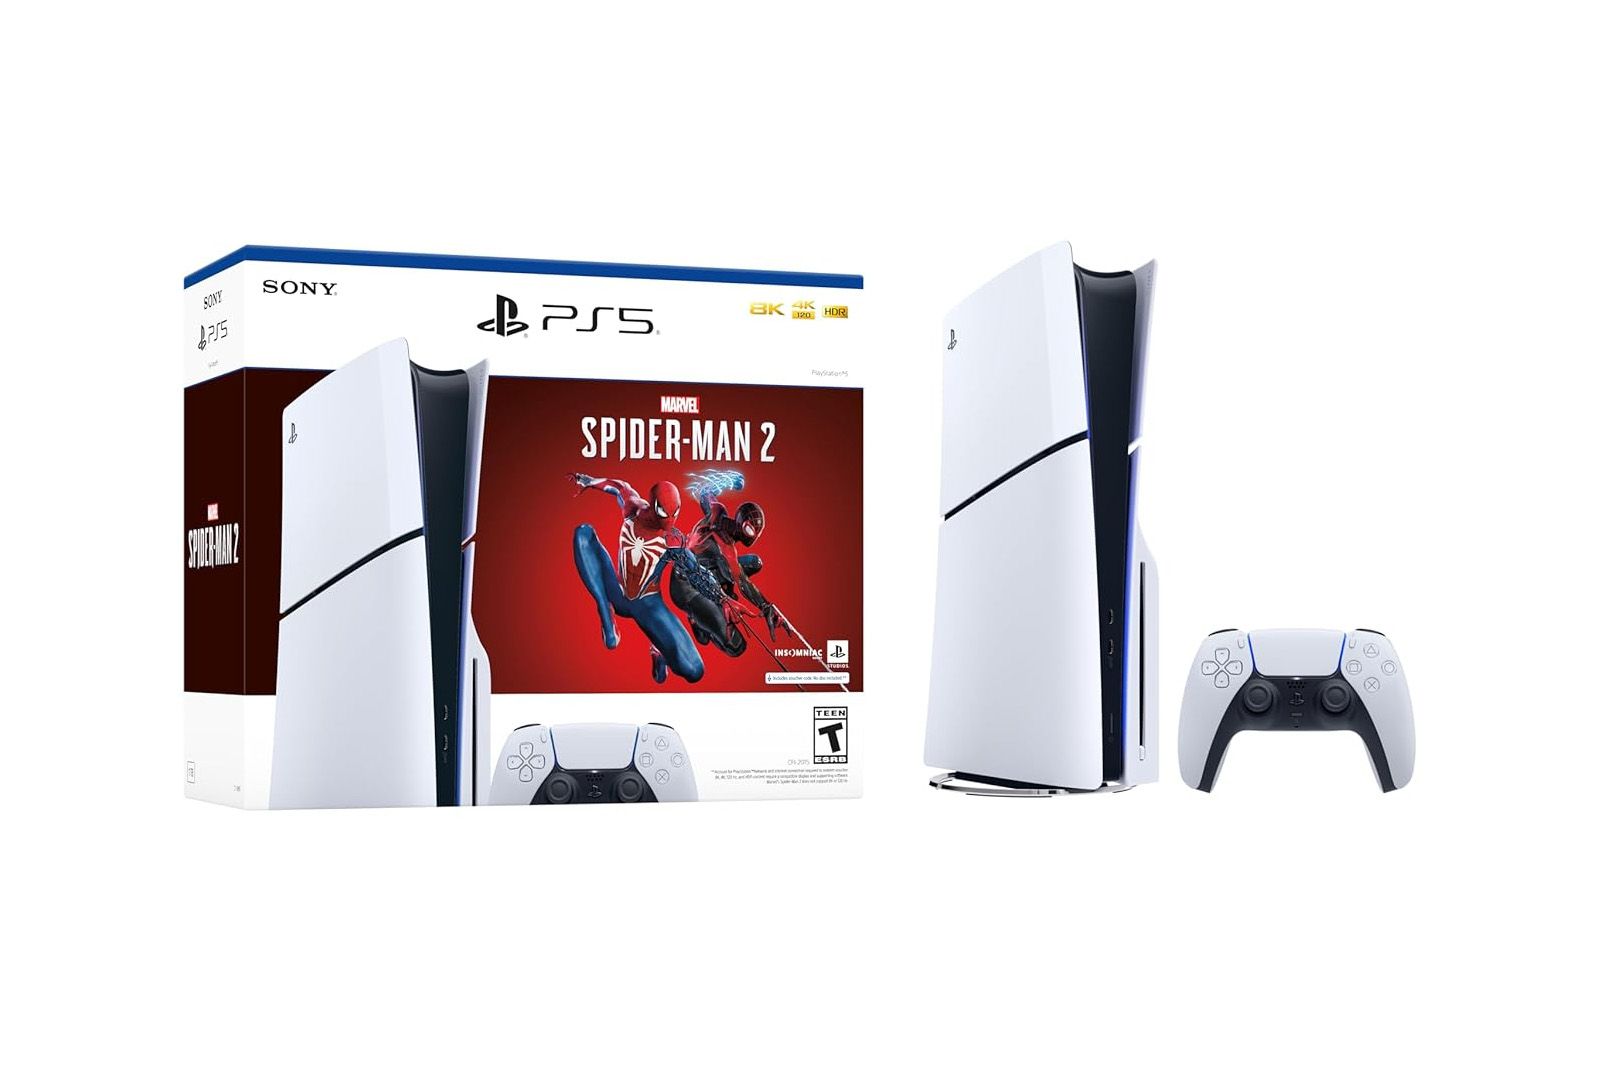 PS5 Slim spider-man 2 bundle